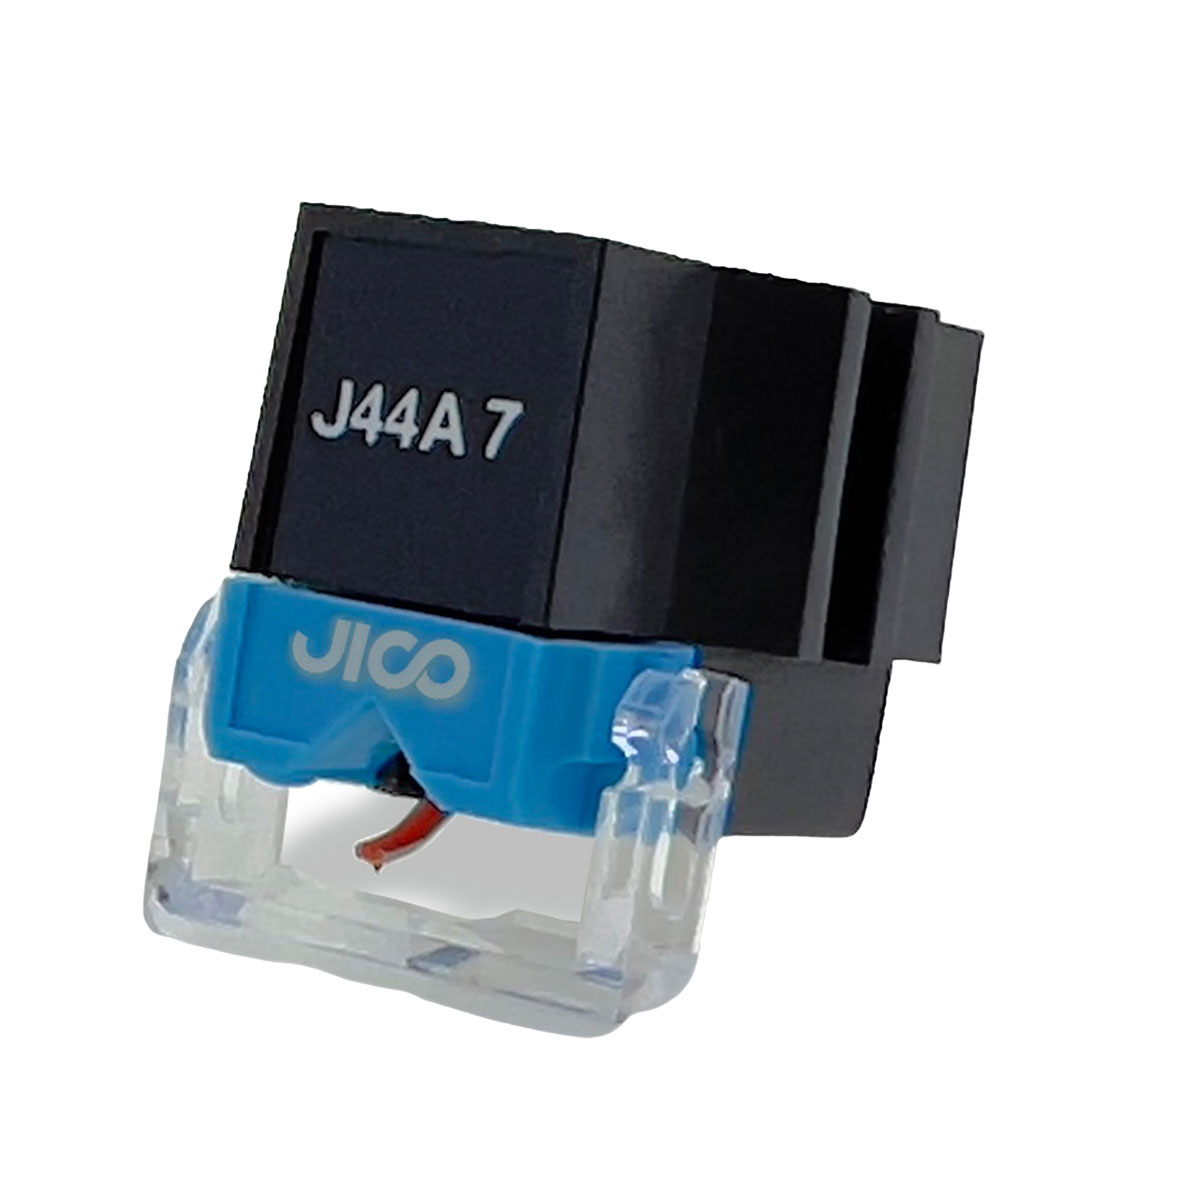 JICO J44A7-DJ-SD